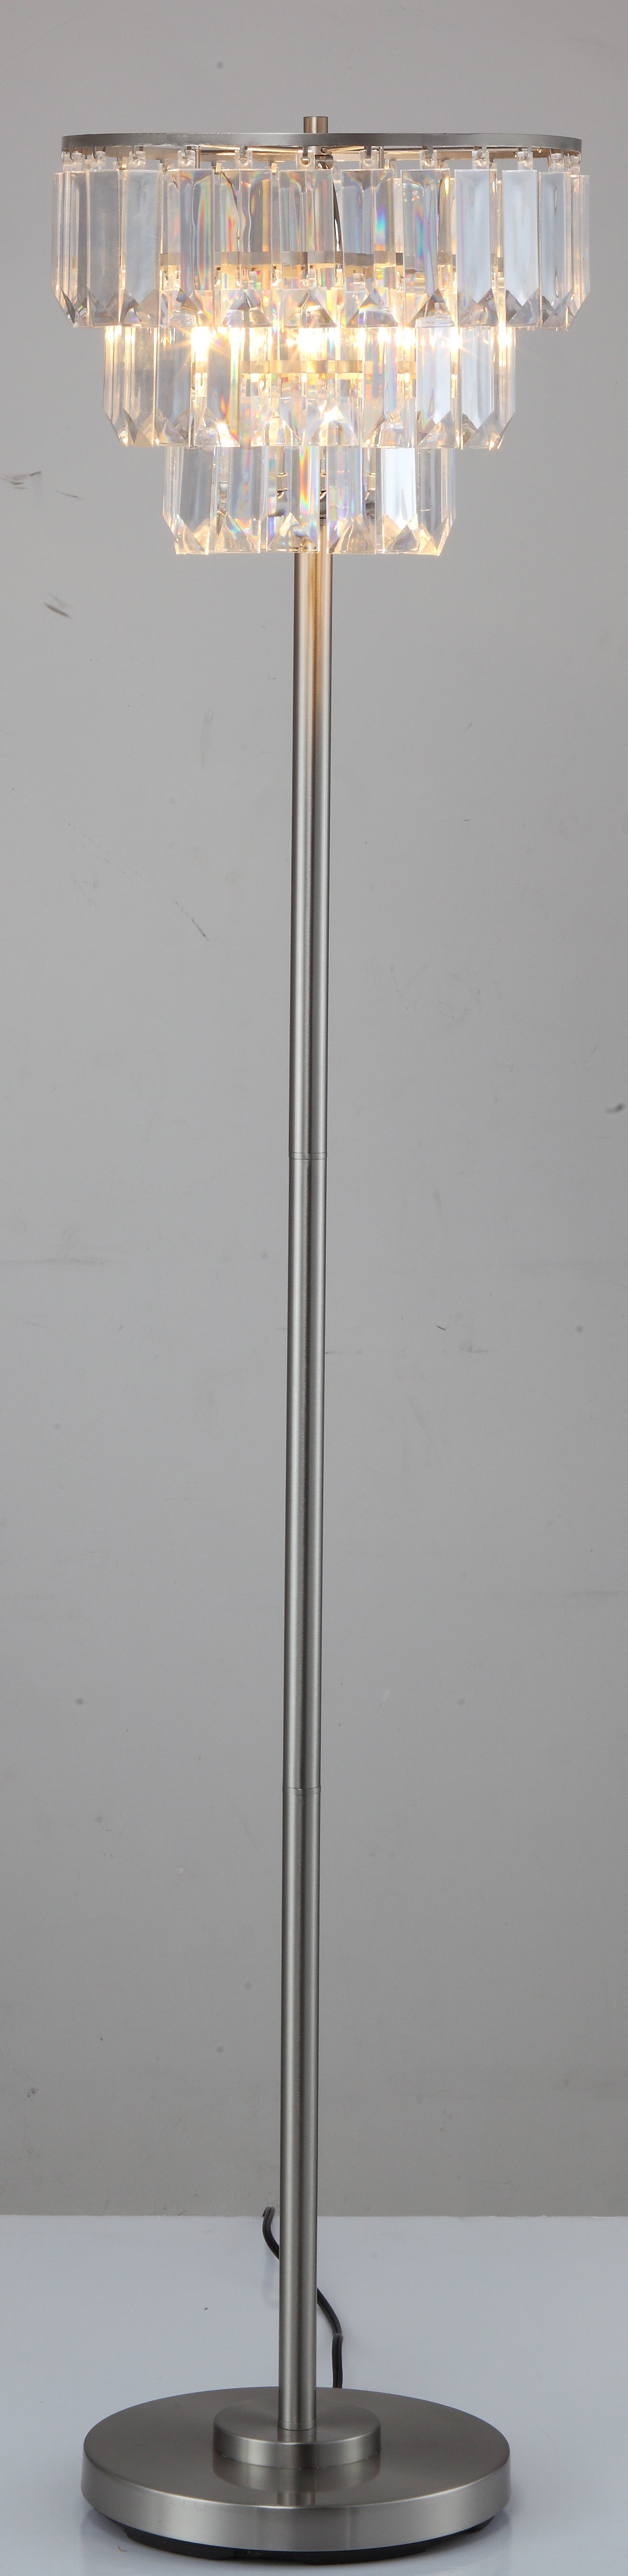 60.5"H CONTEMPORARY CRYSTAL SHADE FLOOR LAMP 1PC CTN brushed nickel-metal